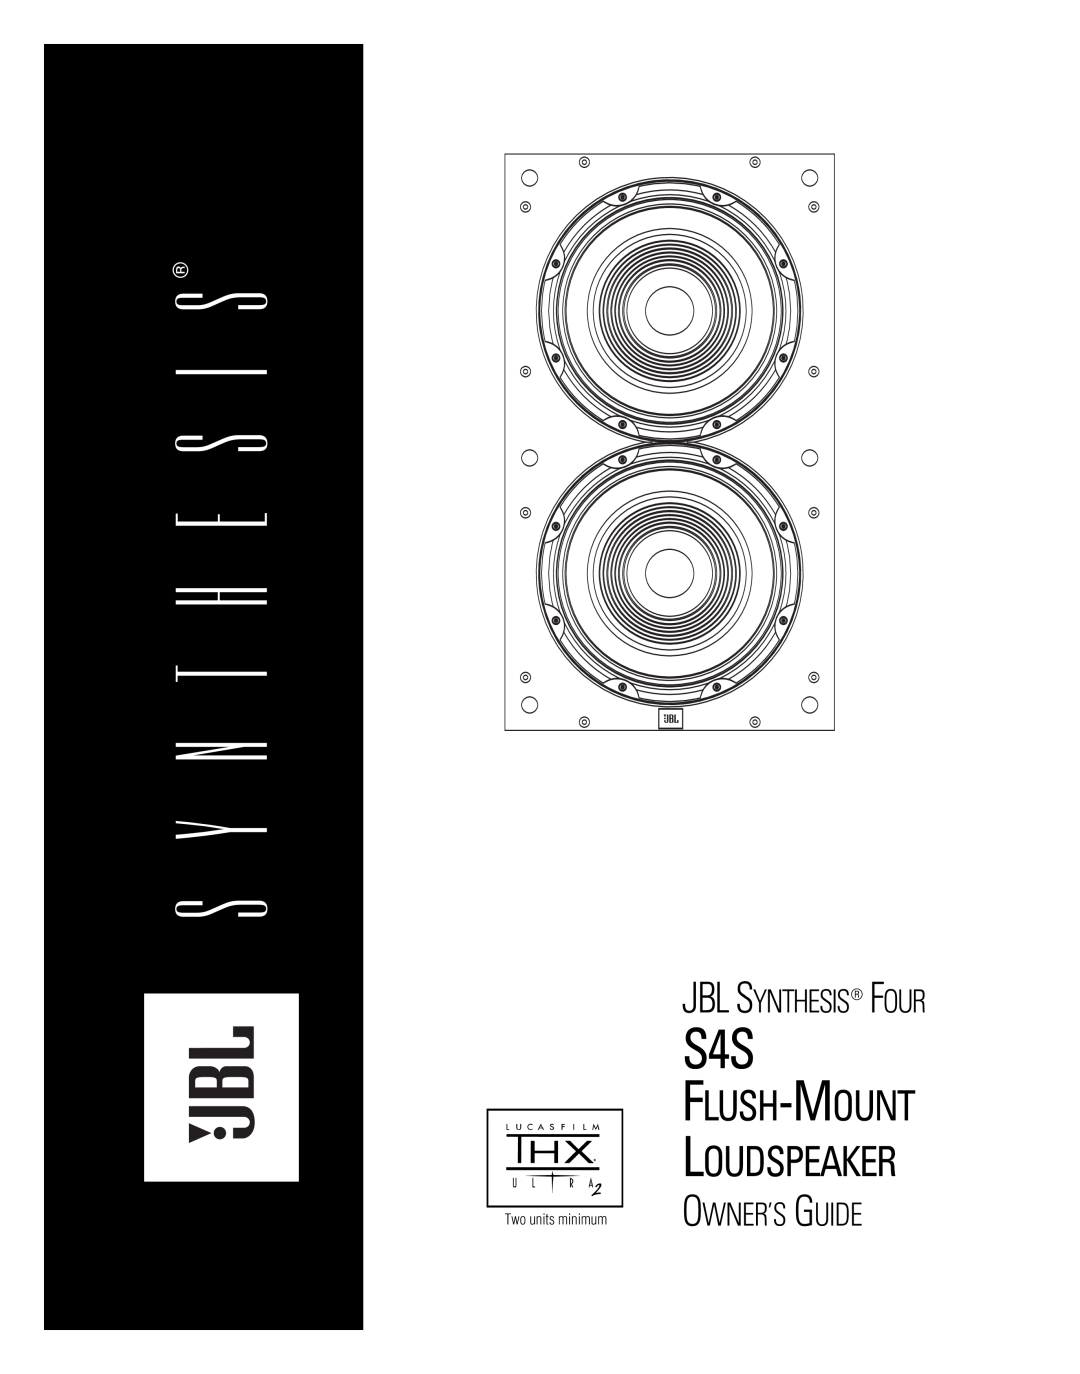 JBL S4S manual Owner’S Guide, Flush-Mountloudspeaker, Jbl Synthesis Four, Two units minimum 